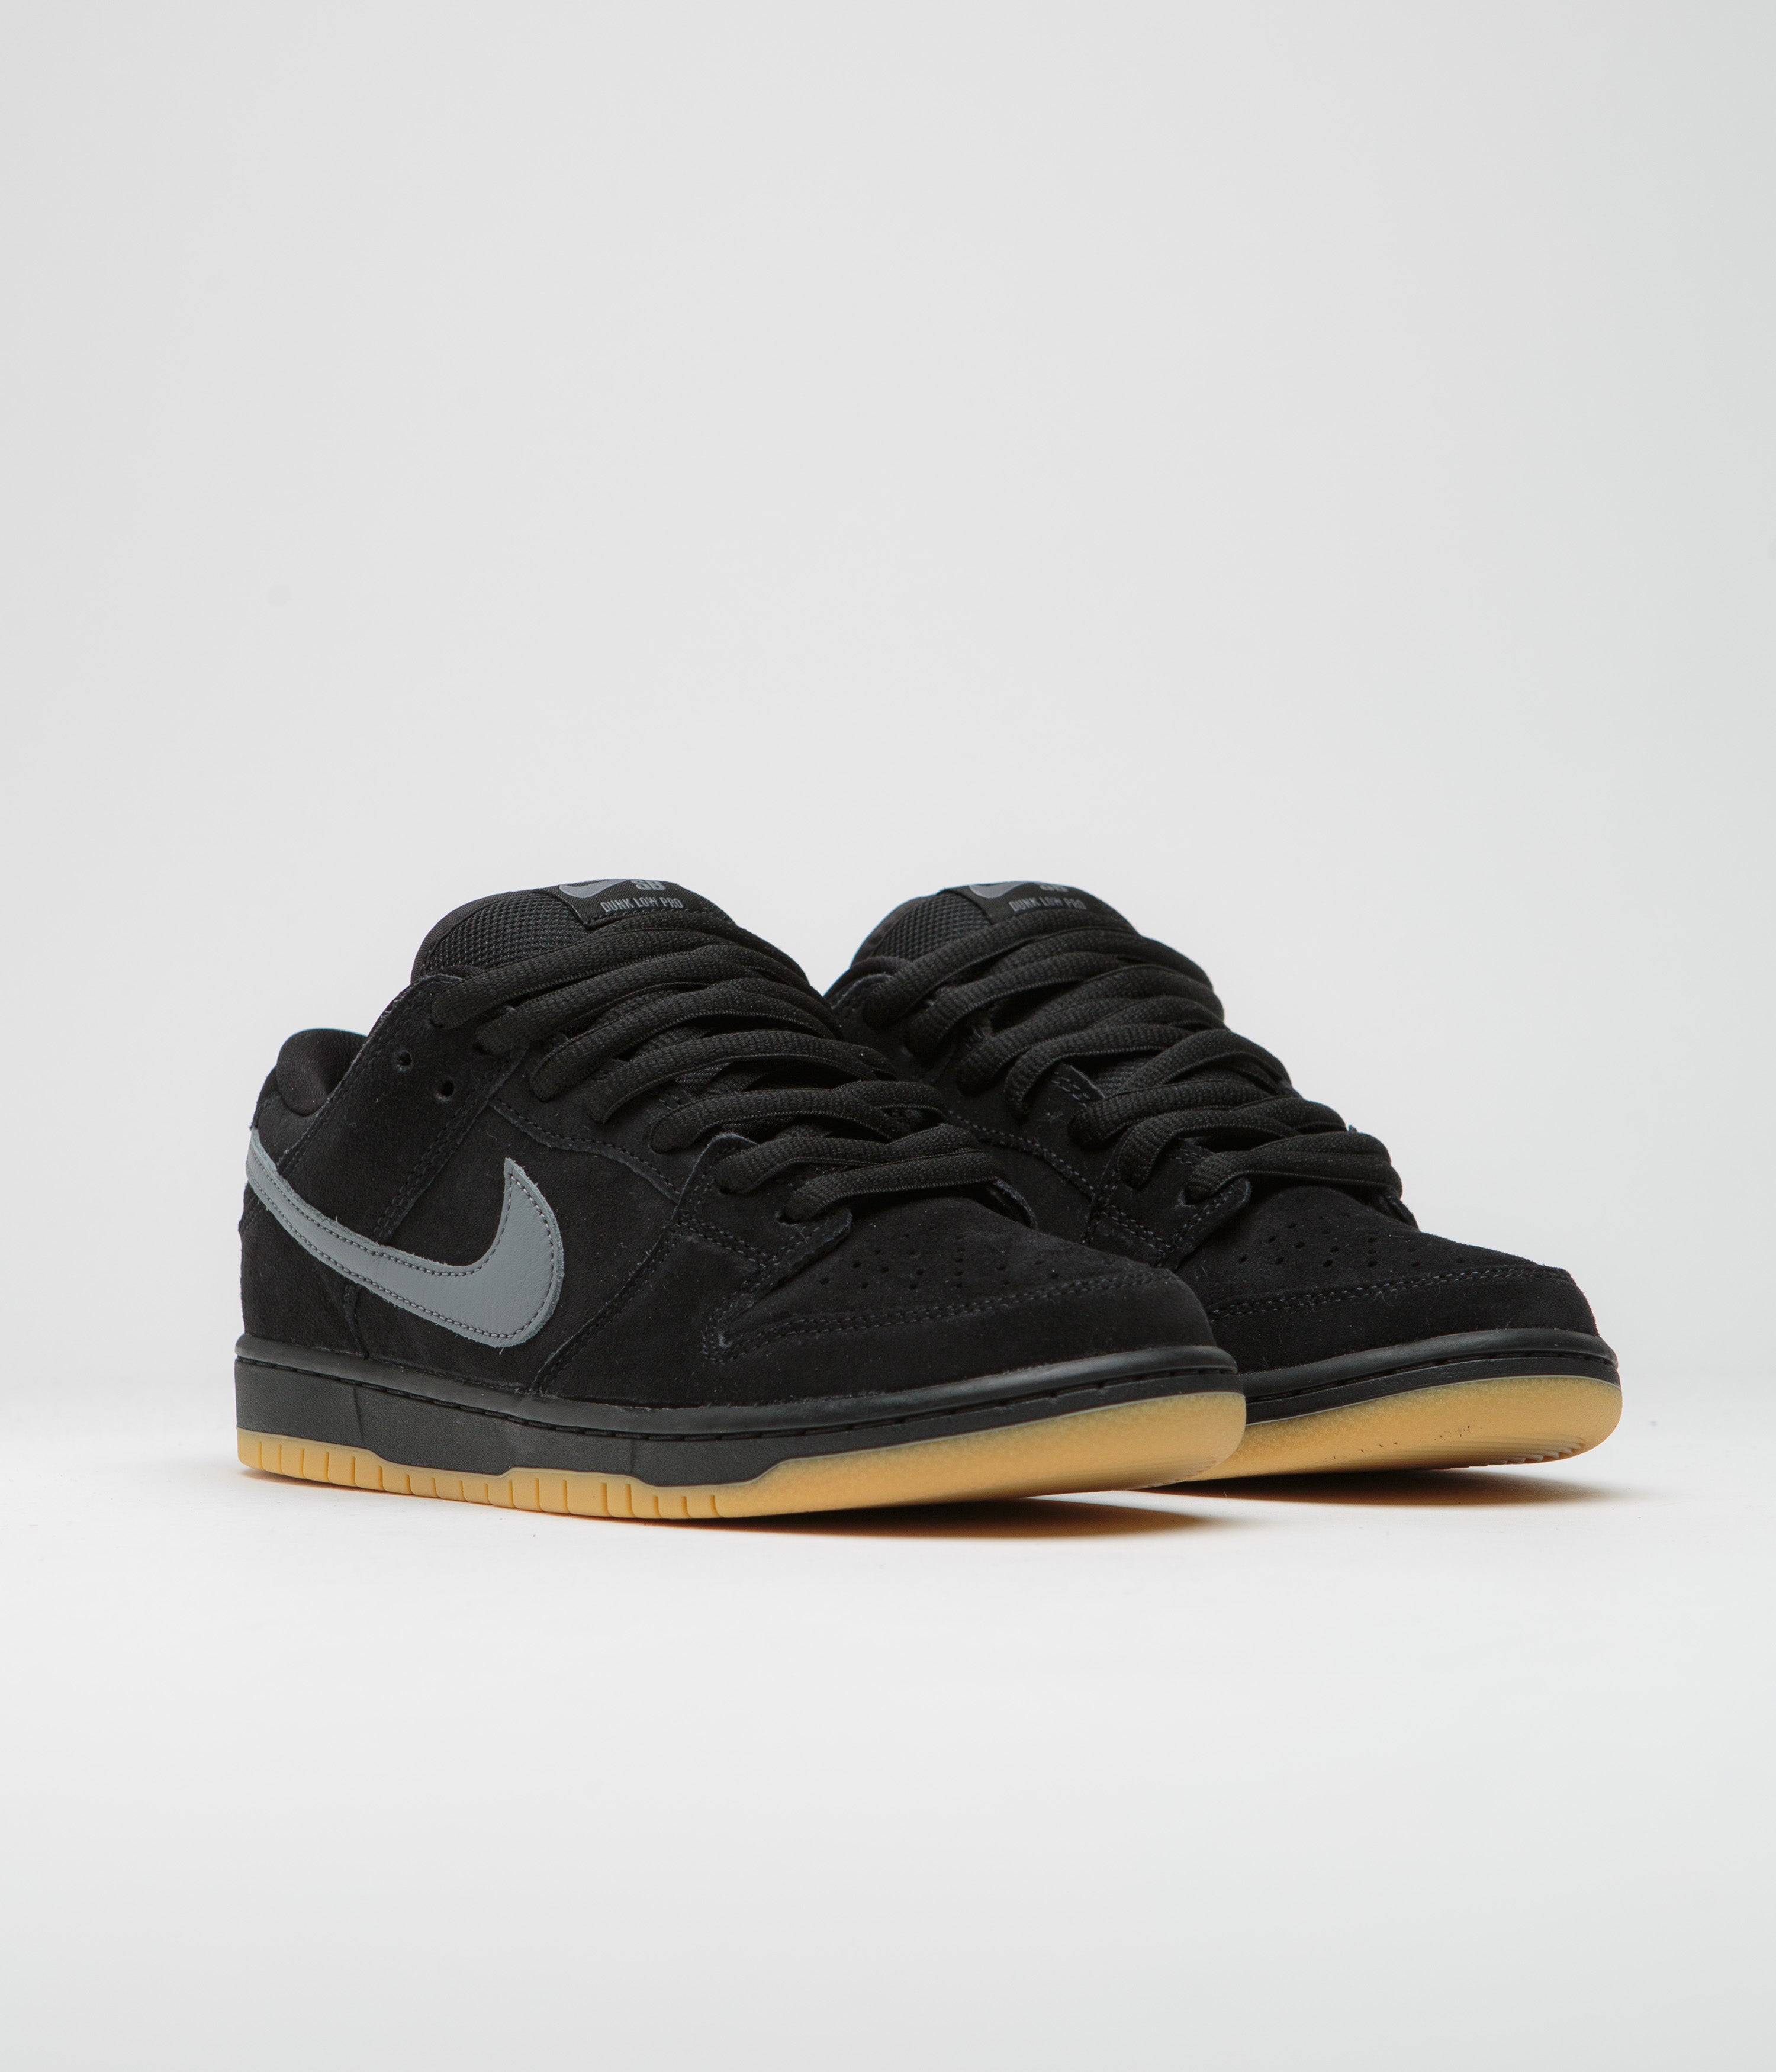 Nike SB Dunk Low Pro 'Fog' Shoes - Black / Cool Grey - Black ...